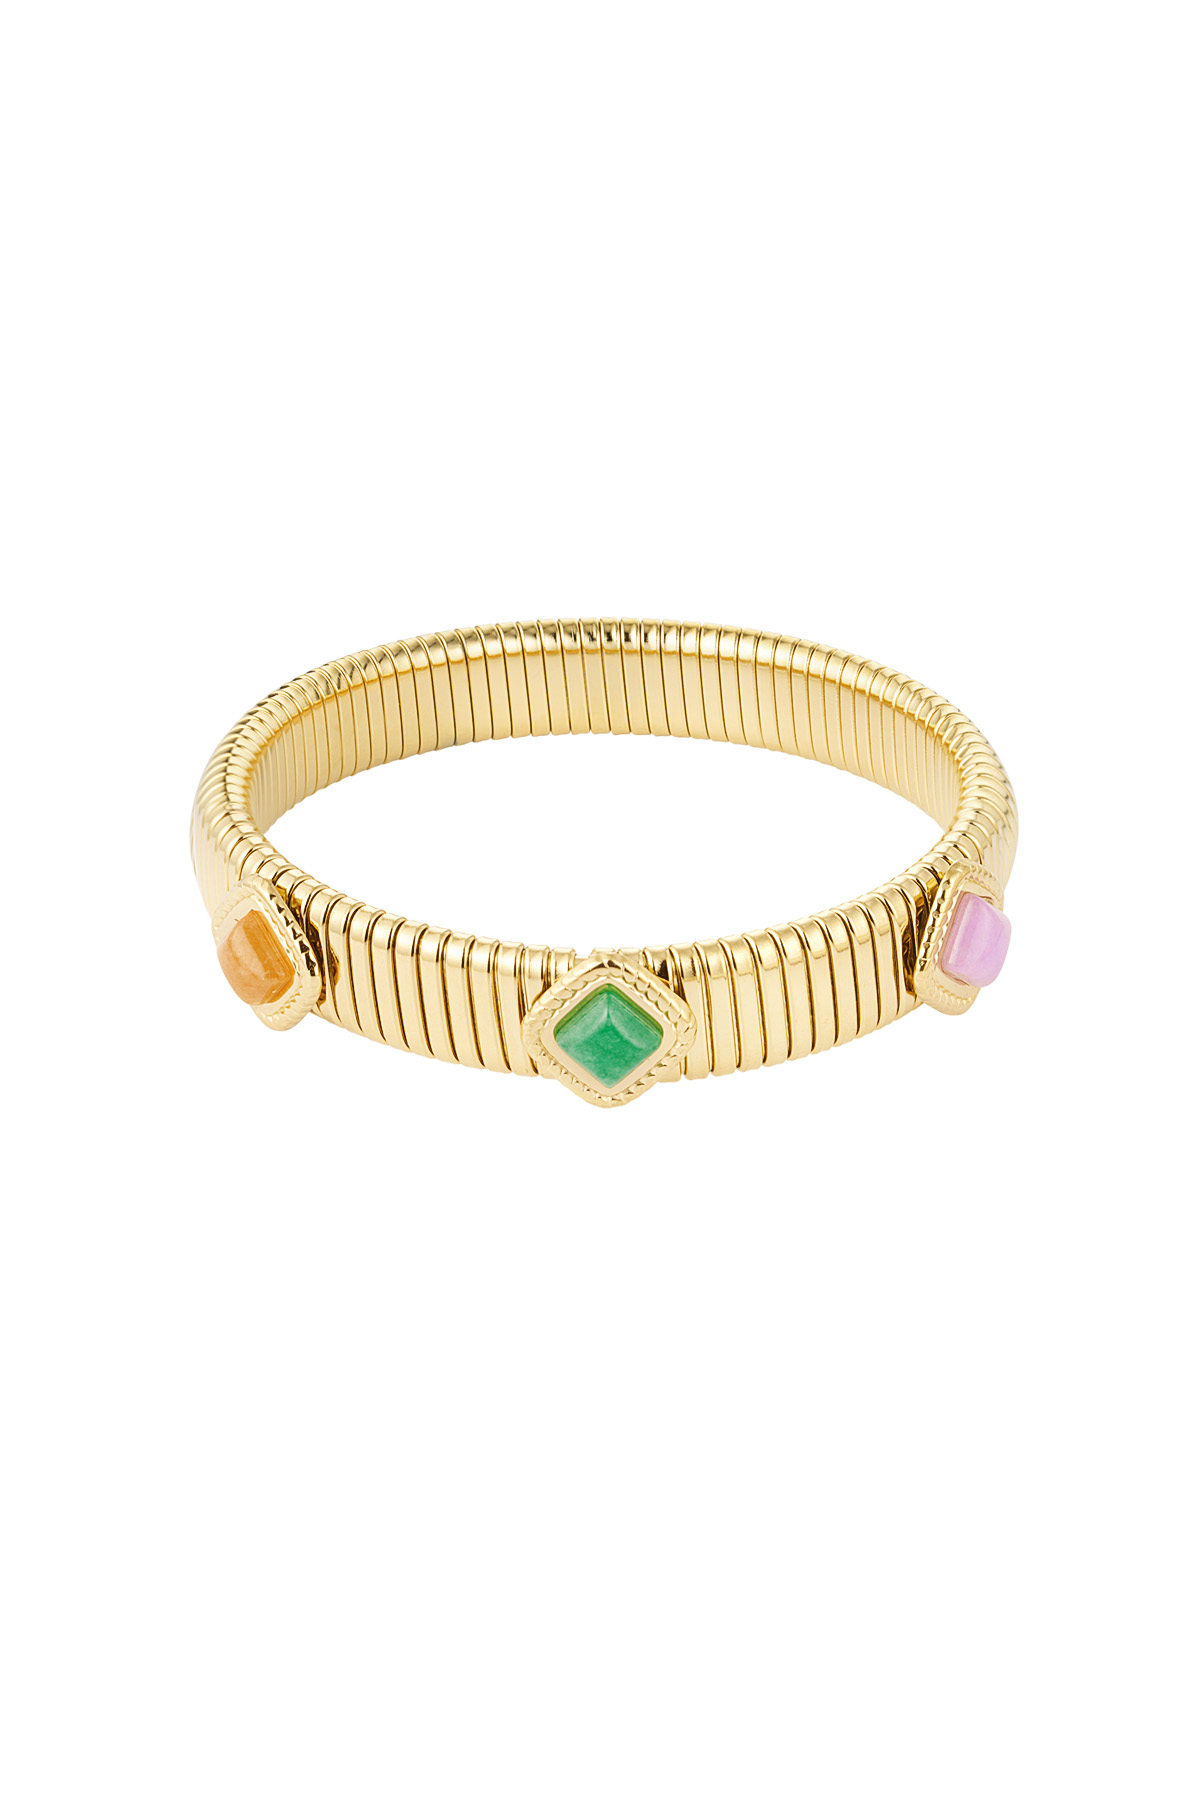 Bohemian eclectic bracelet - gold